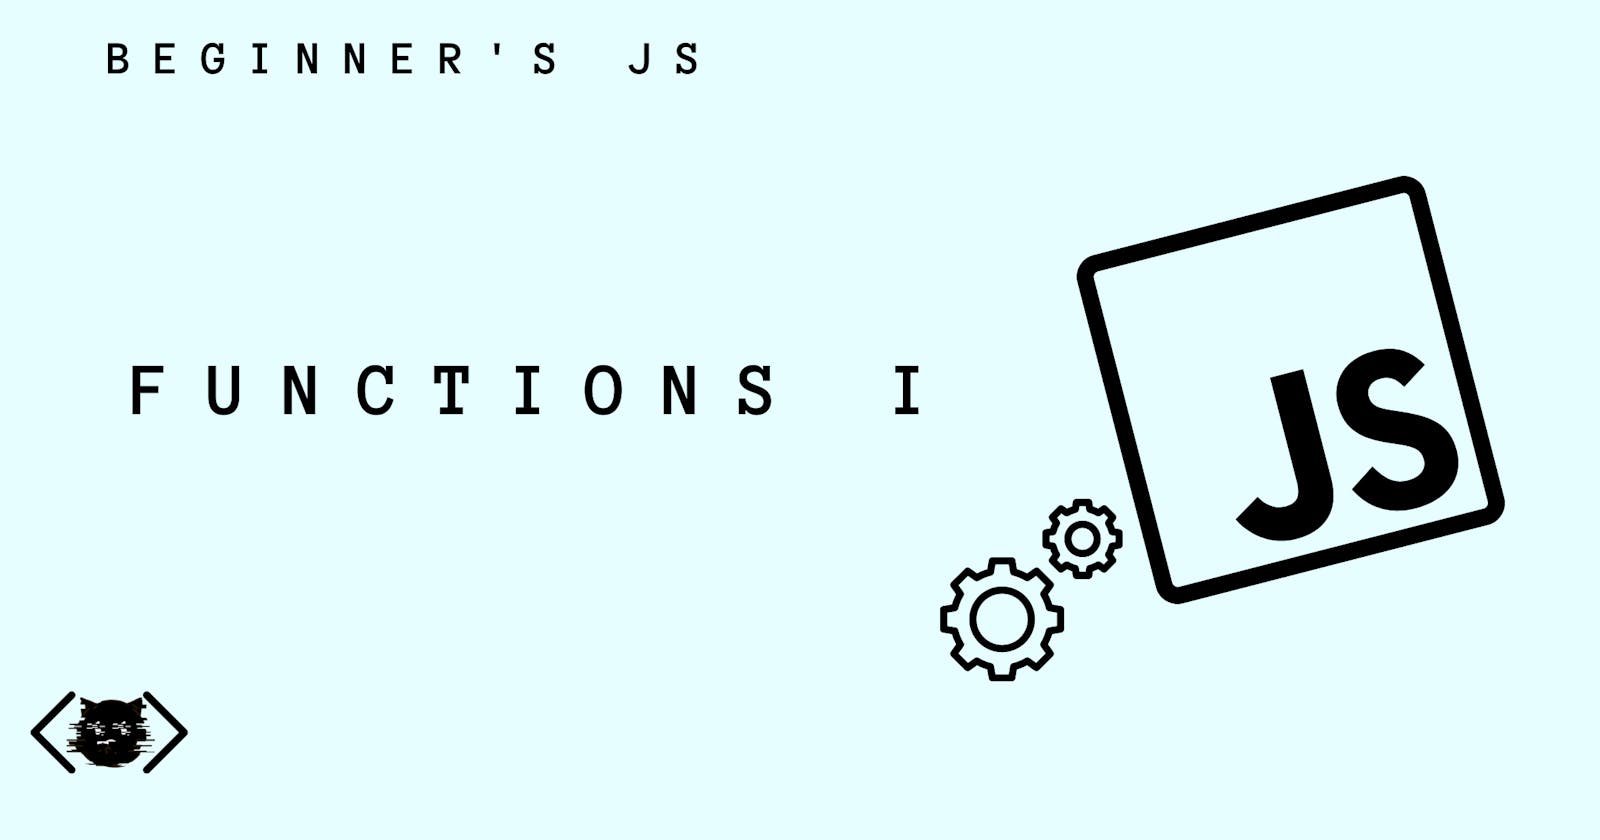 Functions I - Beginner's JS